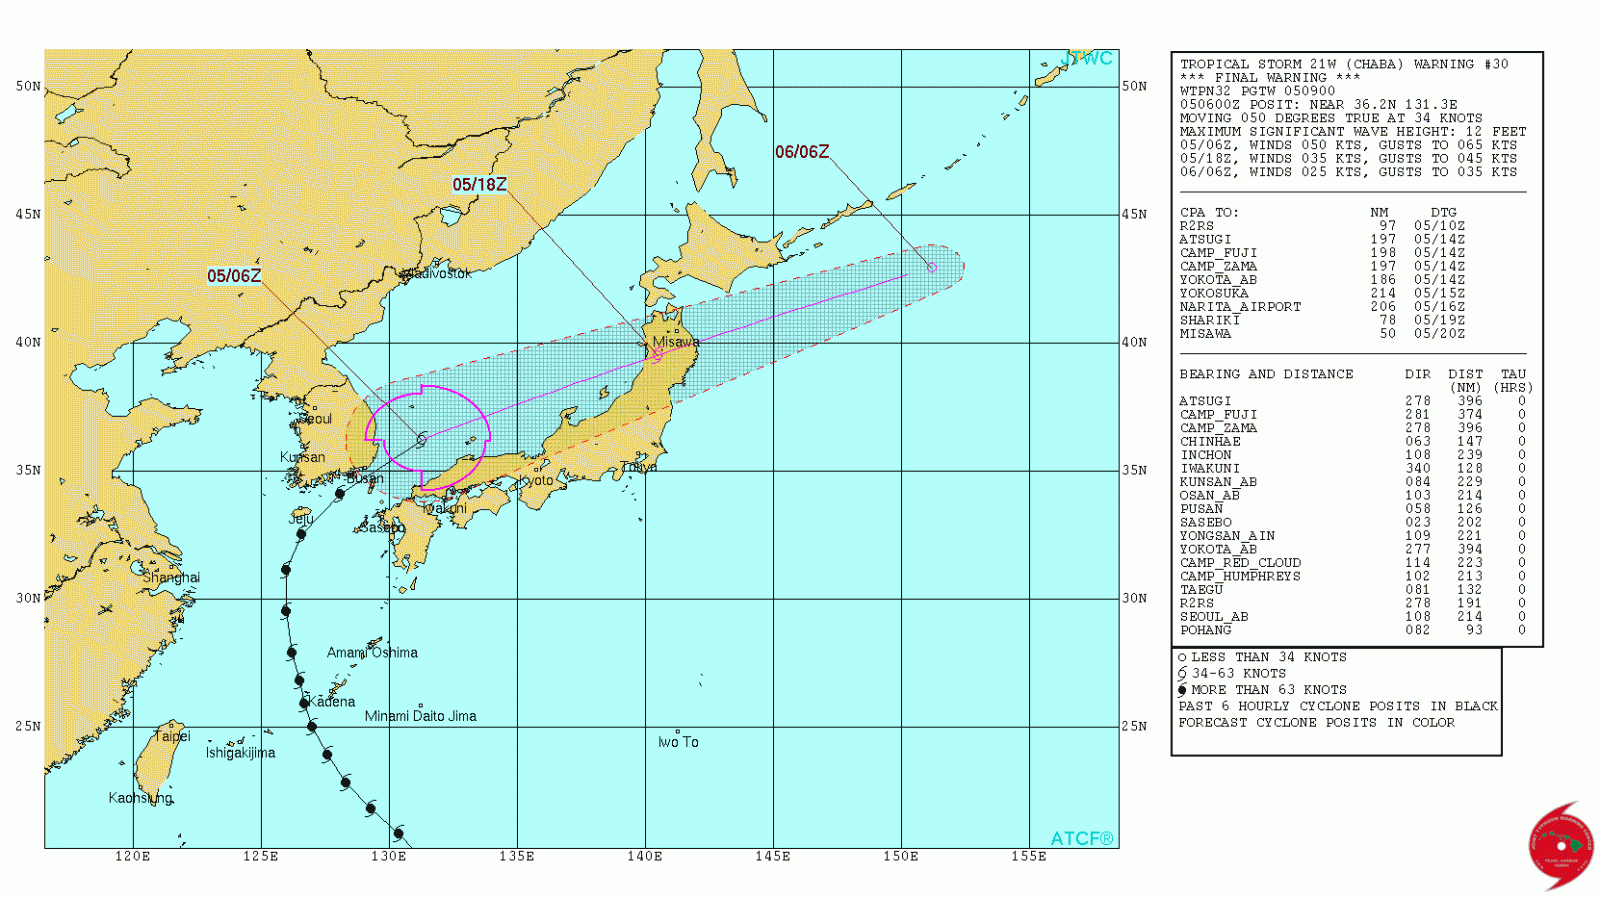 Tropical Storm Chaba 24-hour forecast track. Image credit: JTWC